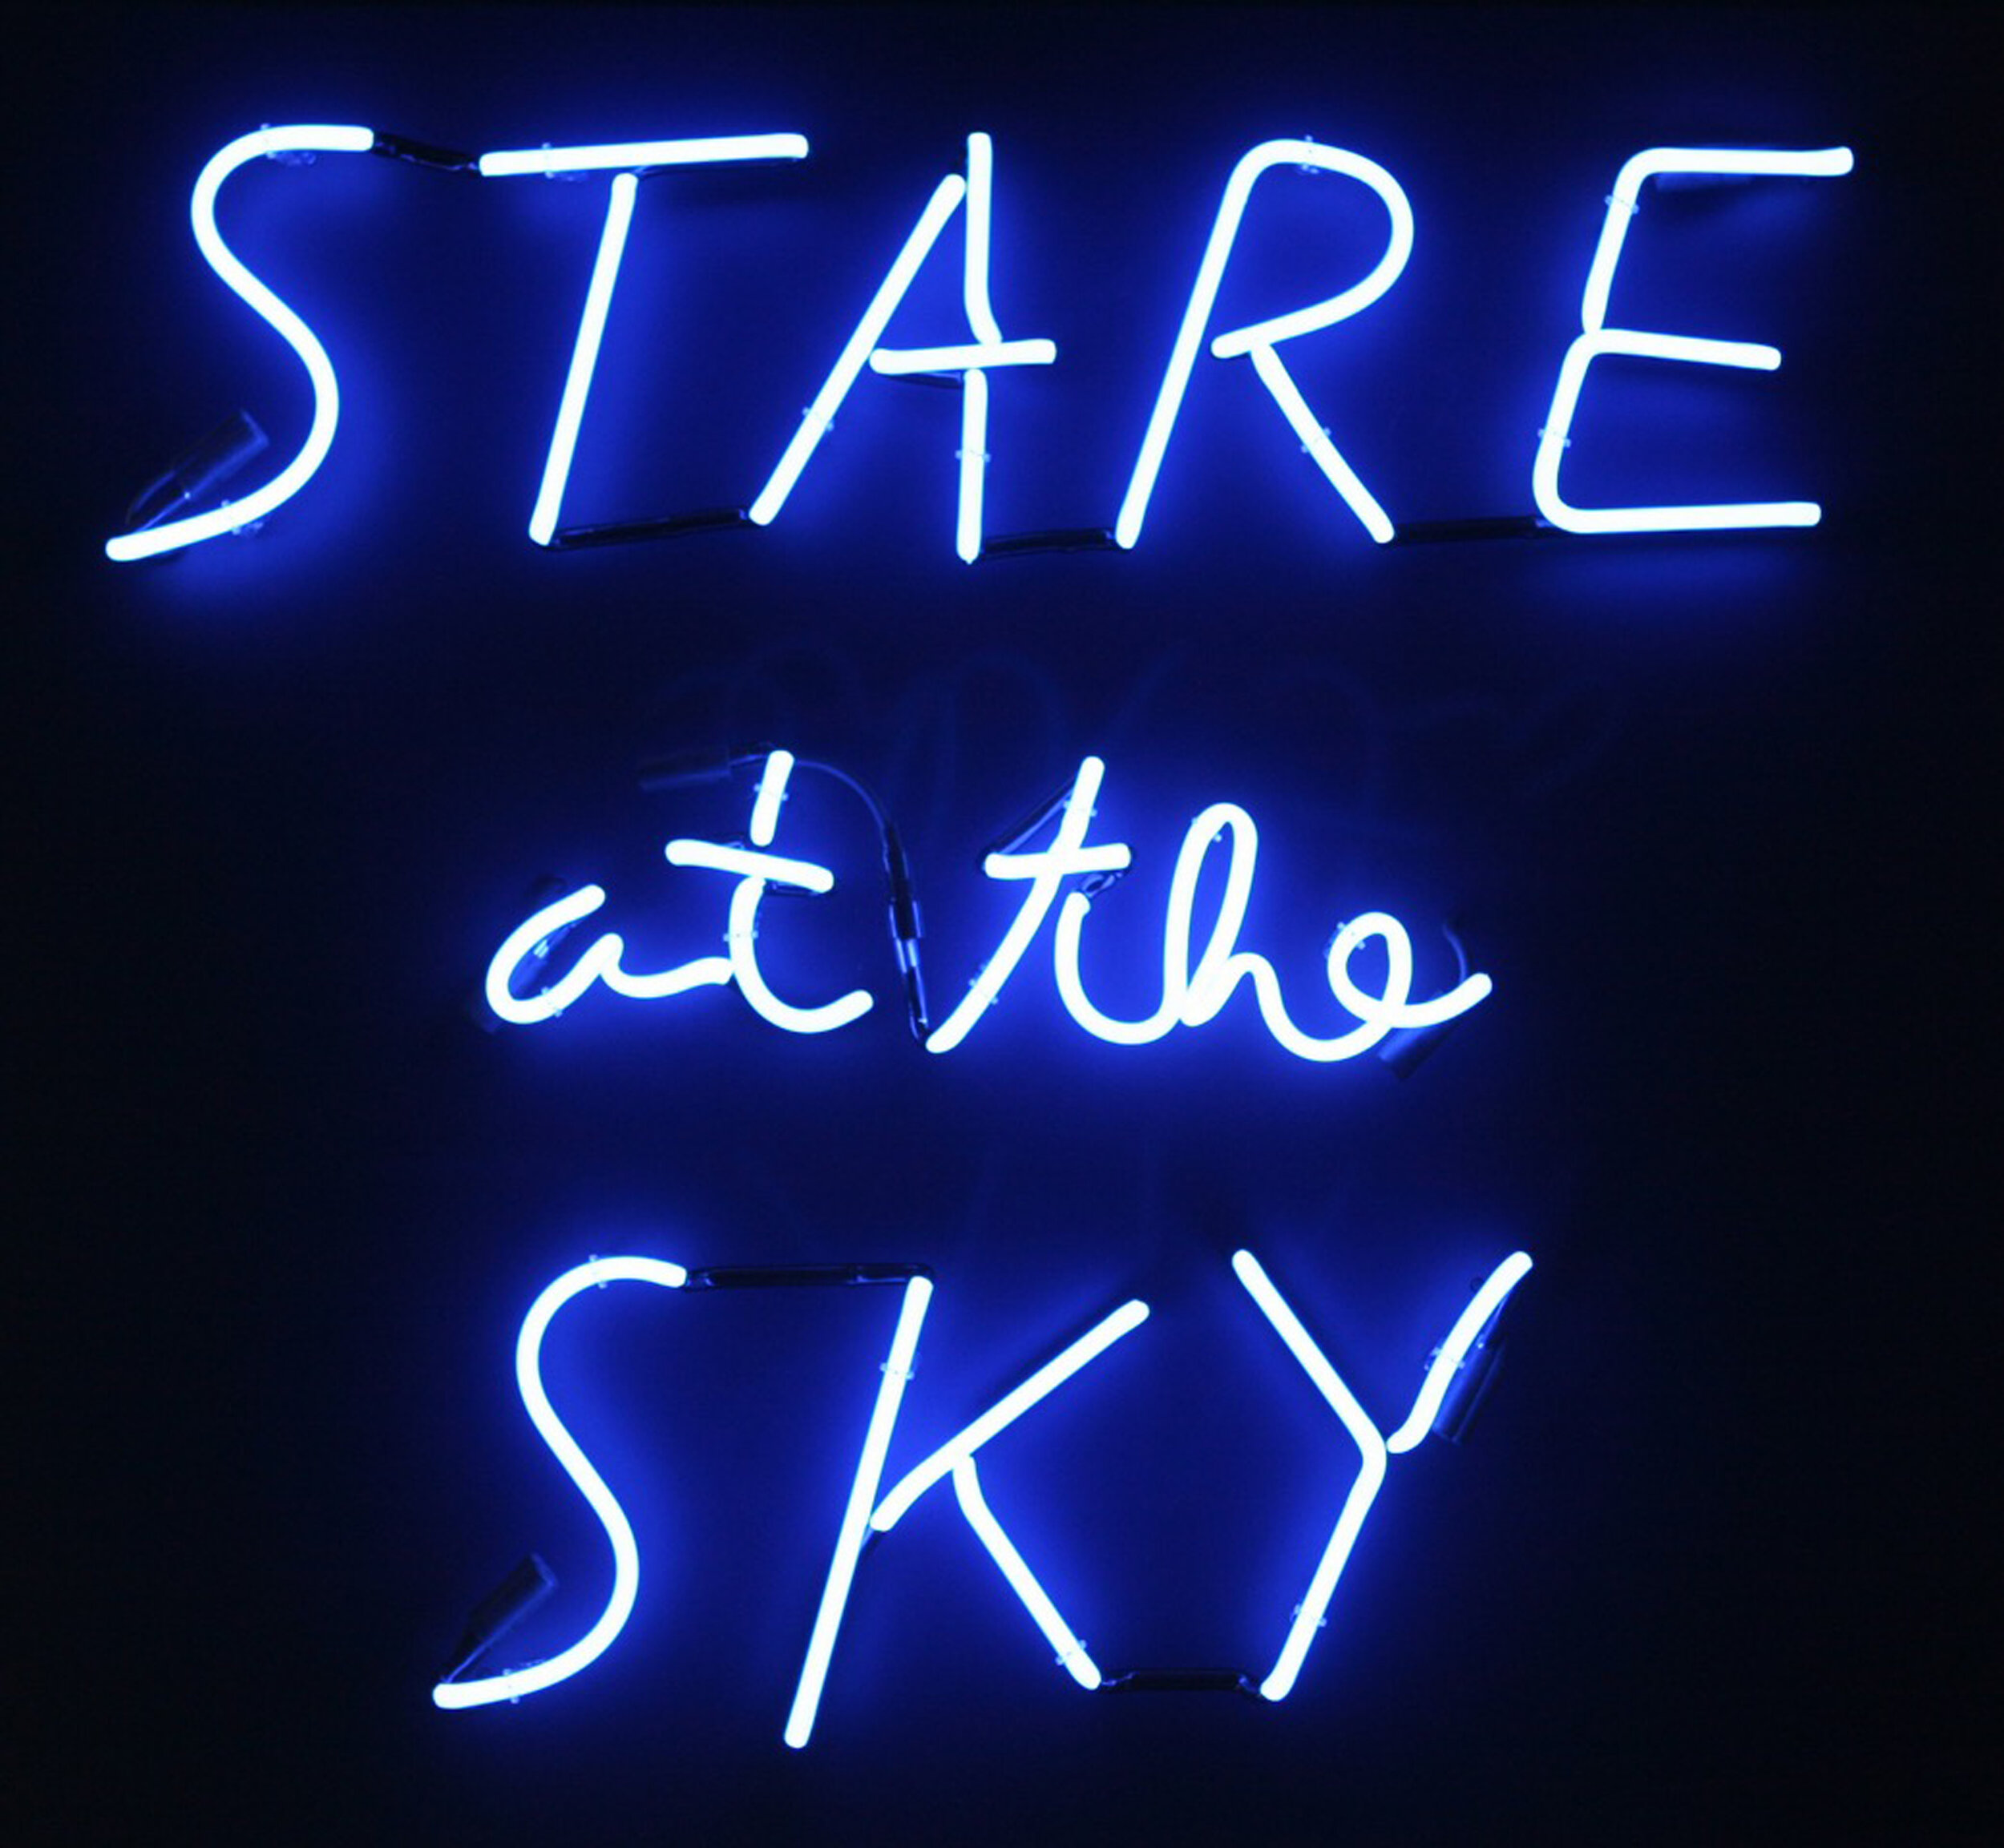 Harvey-Stare at the Sky-neon.jpg